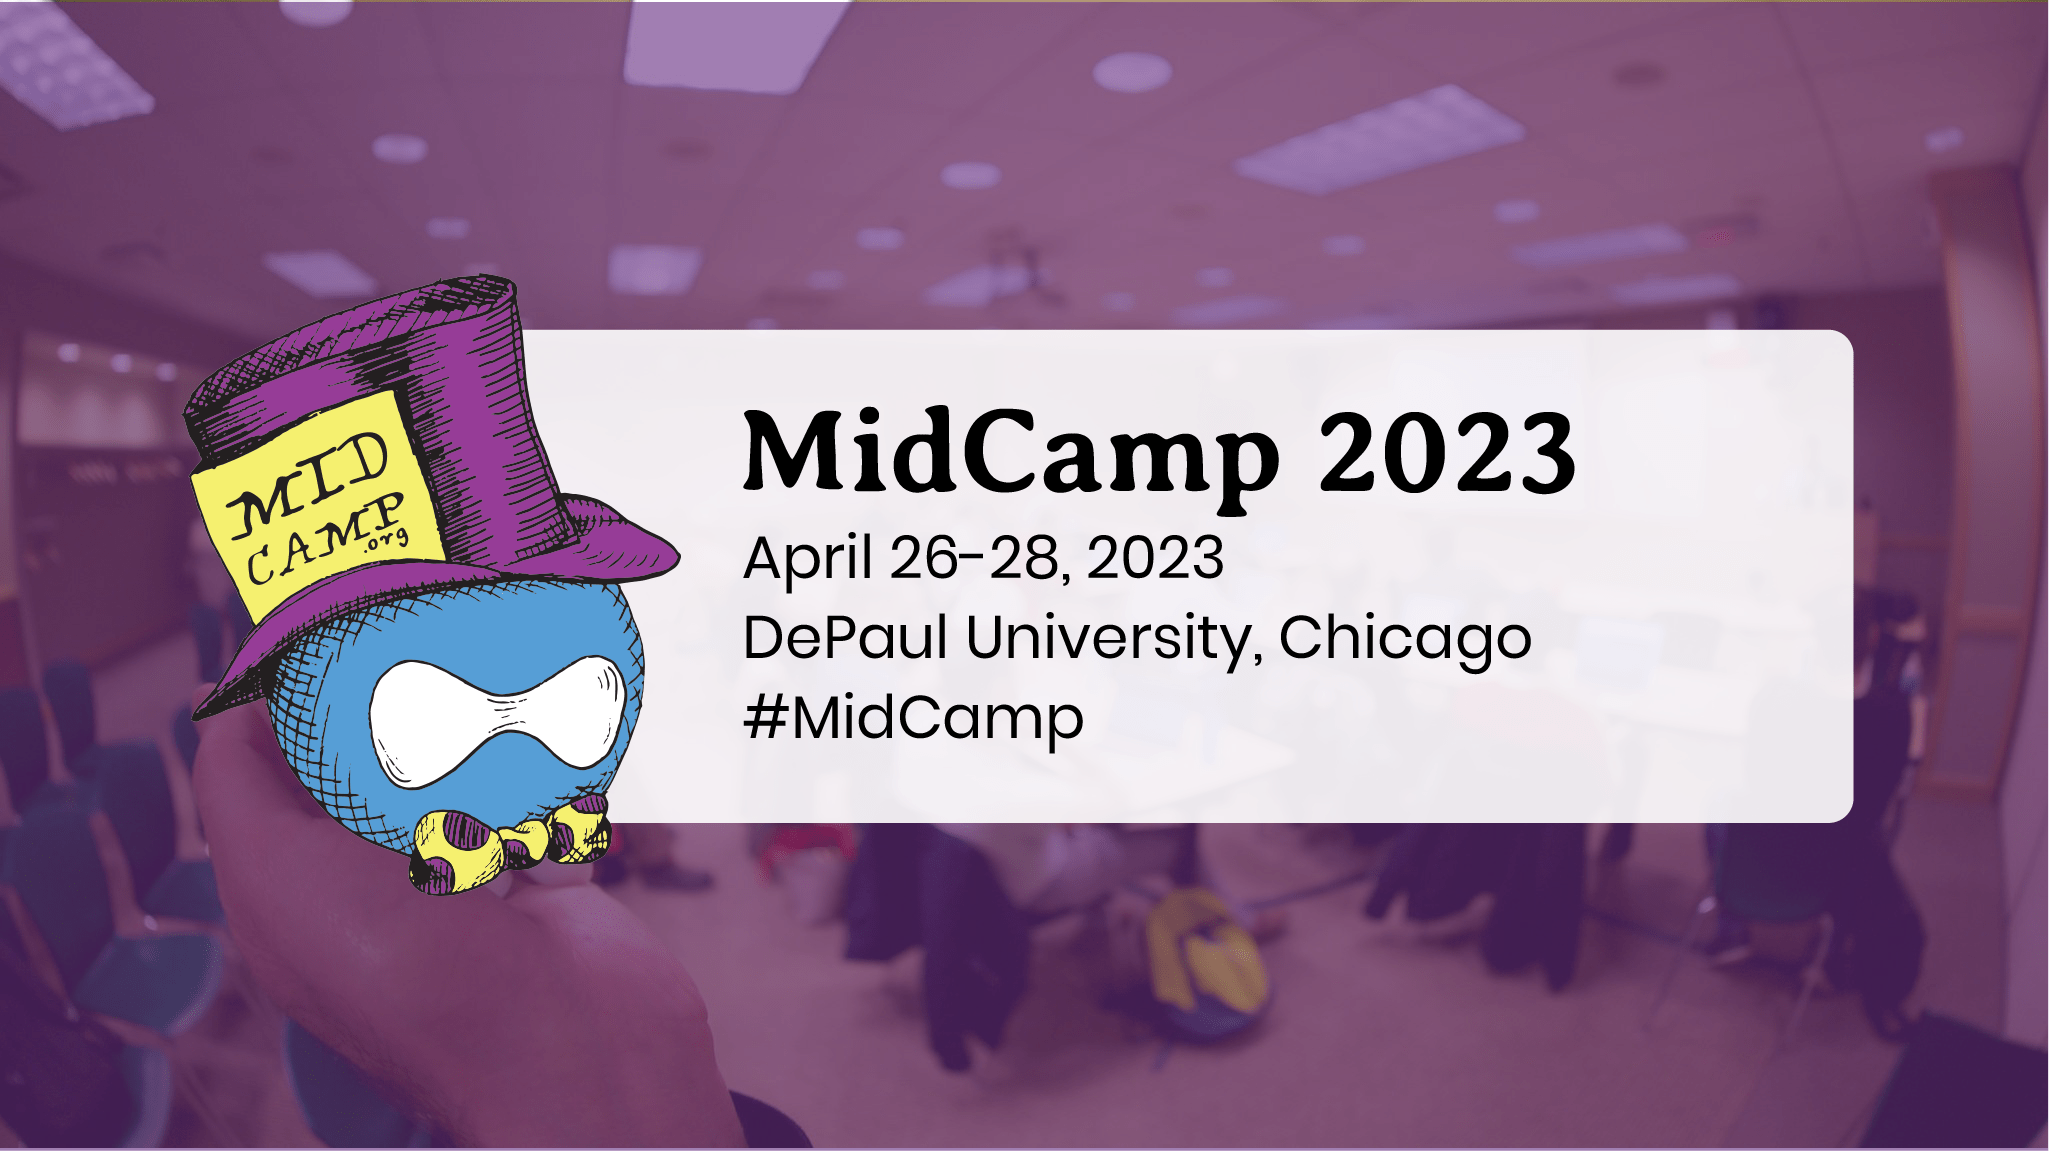 https://www.midcamp.org/sites/default/files/inline-images/MidCamp-Card-2023-purple-min.png